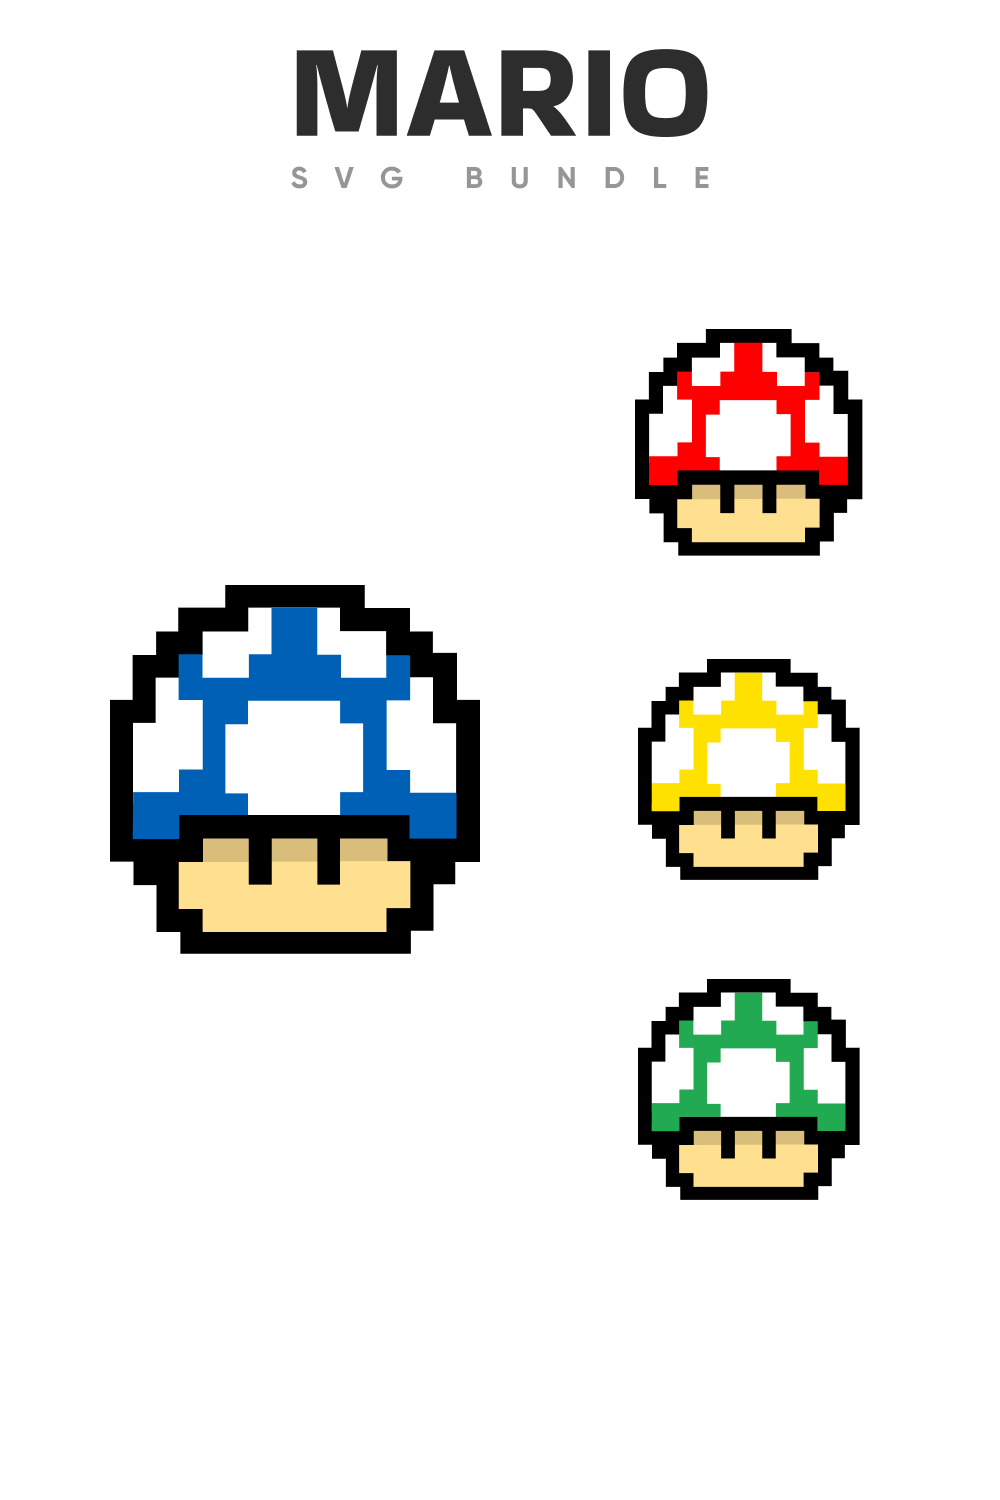 Some Mario options.